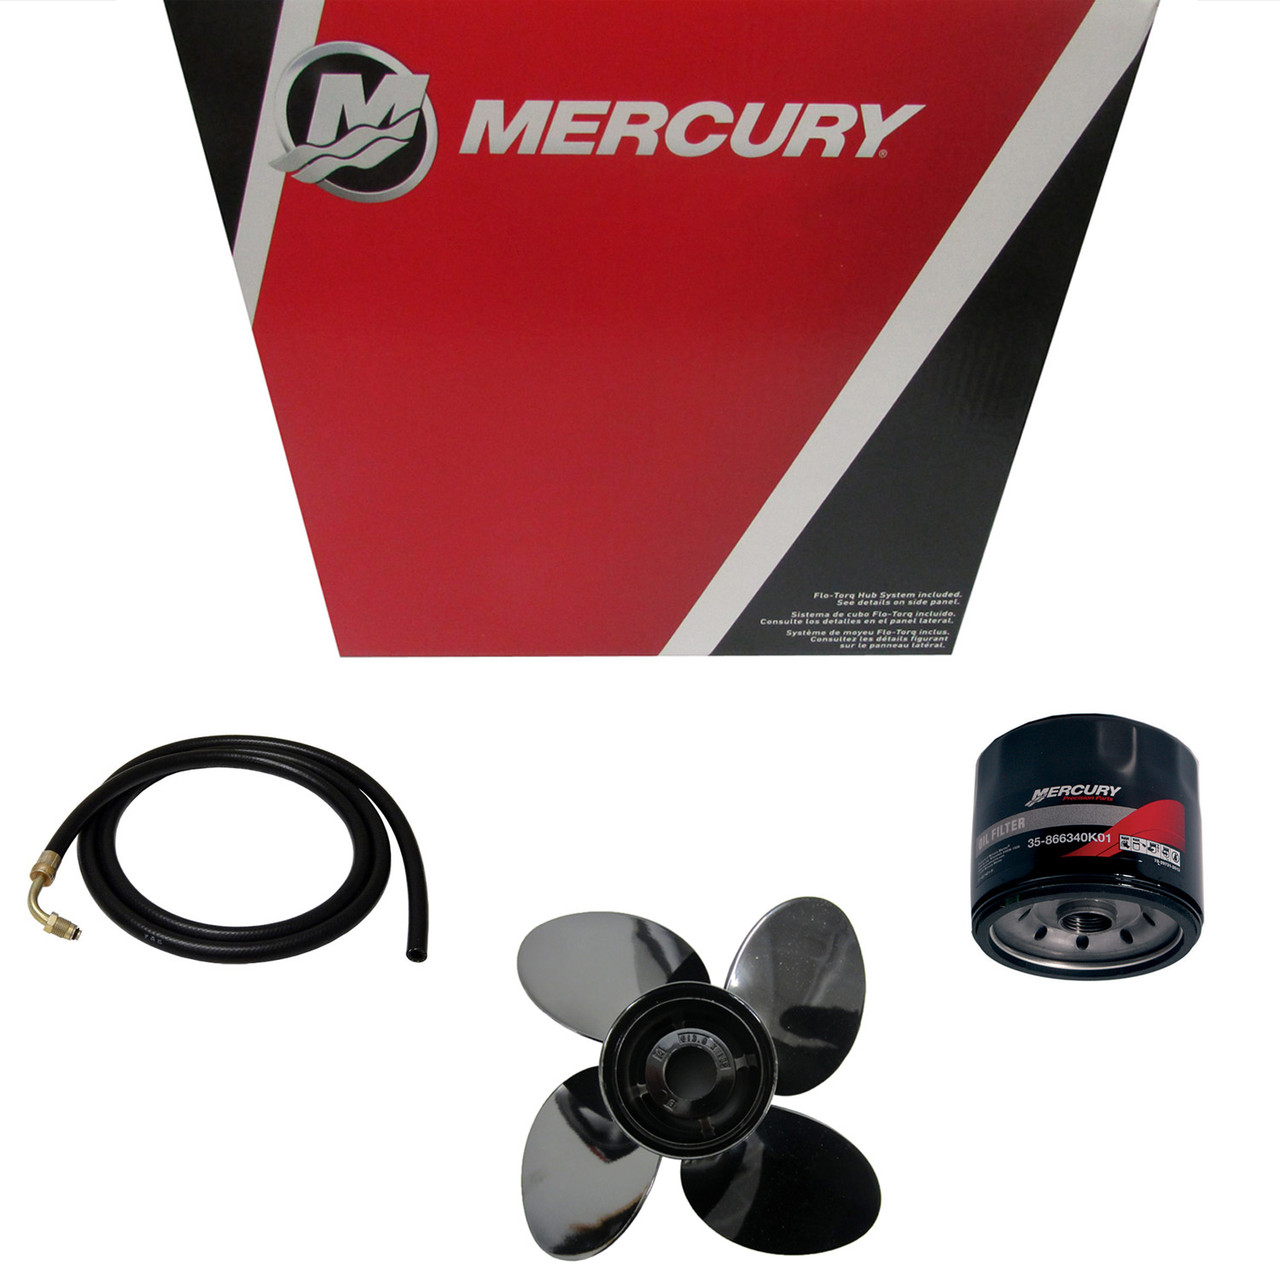 Mercury Marine / Mercruiser New OEM Blkmax 8 3/8 X 6, 48-812951A02